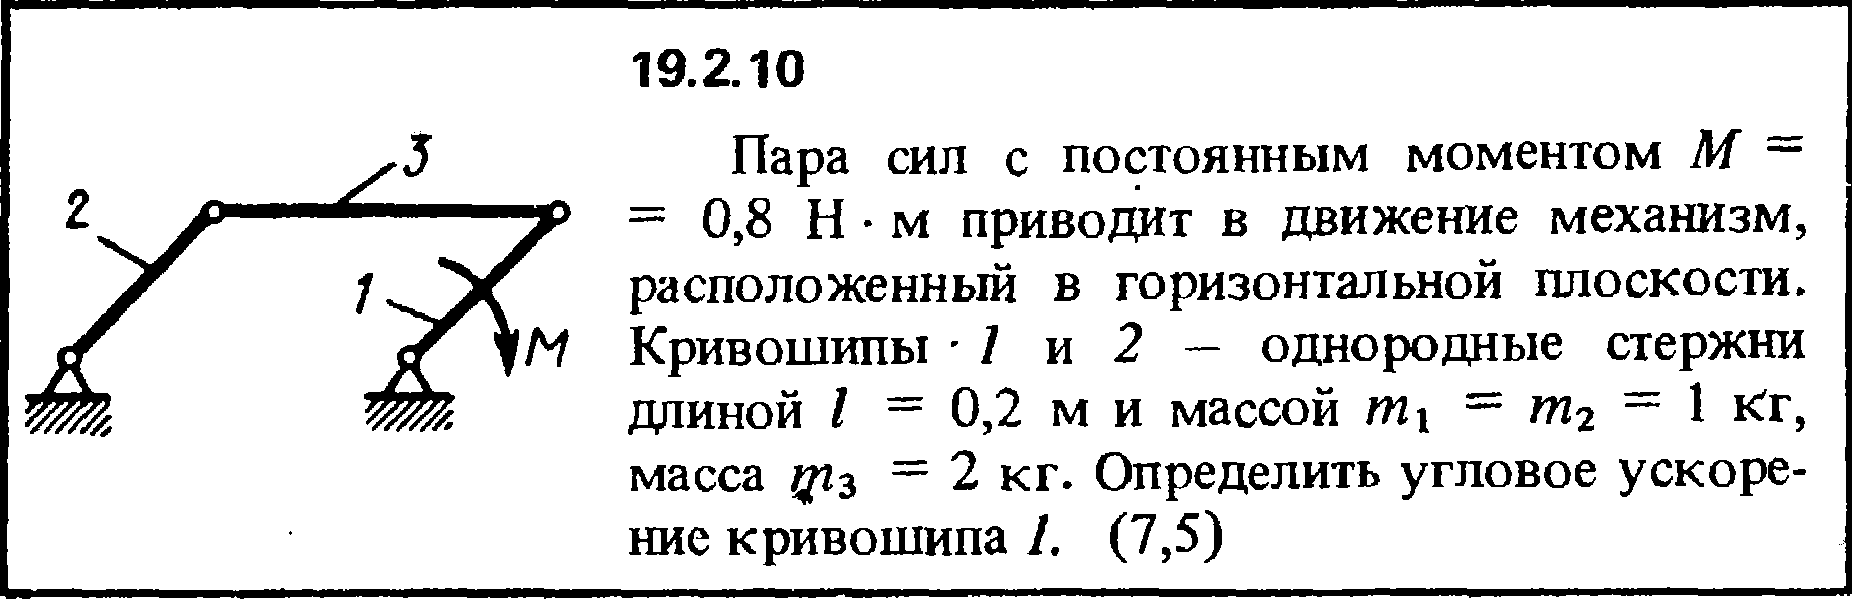 Решение 19.2.10 из сборника (решебника) Кепе О.Е. 1989